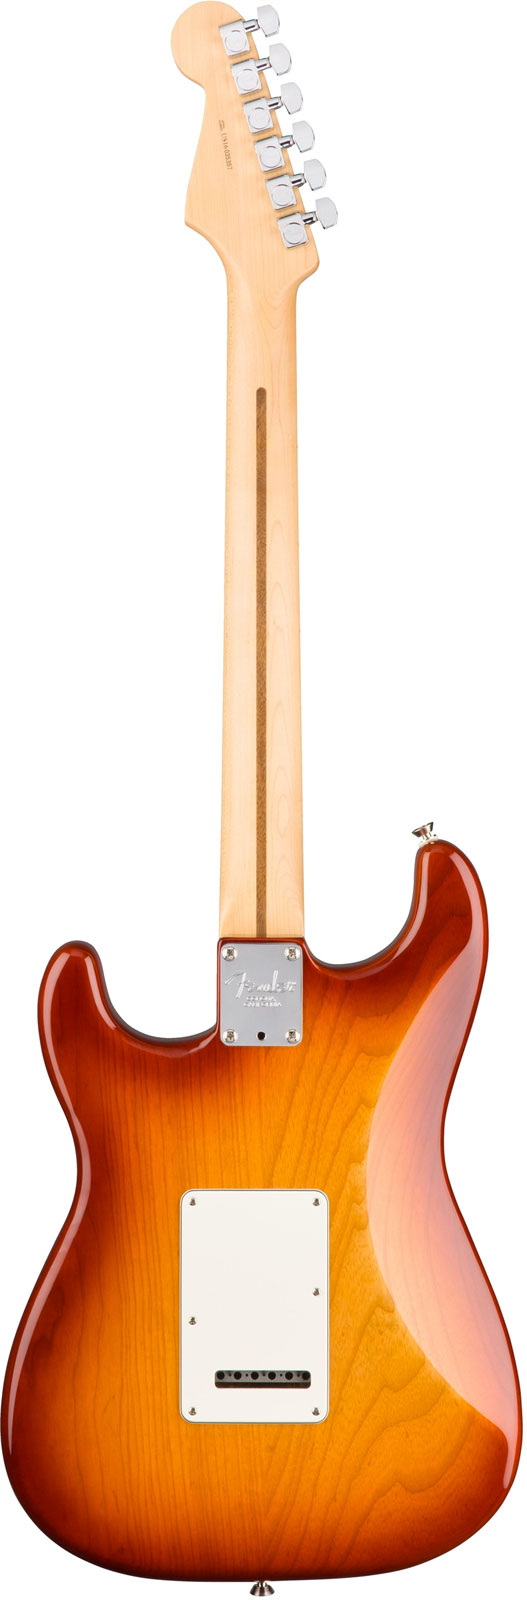 Fender Strat American Professional 2017 3s Usa Mn - Sienna Sunburst - E-Gitarre in Str-Form - Variation 2